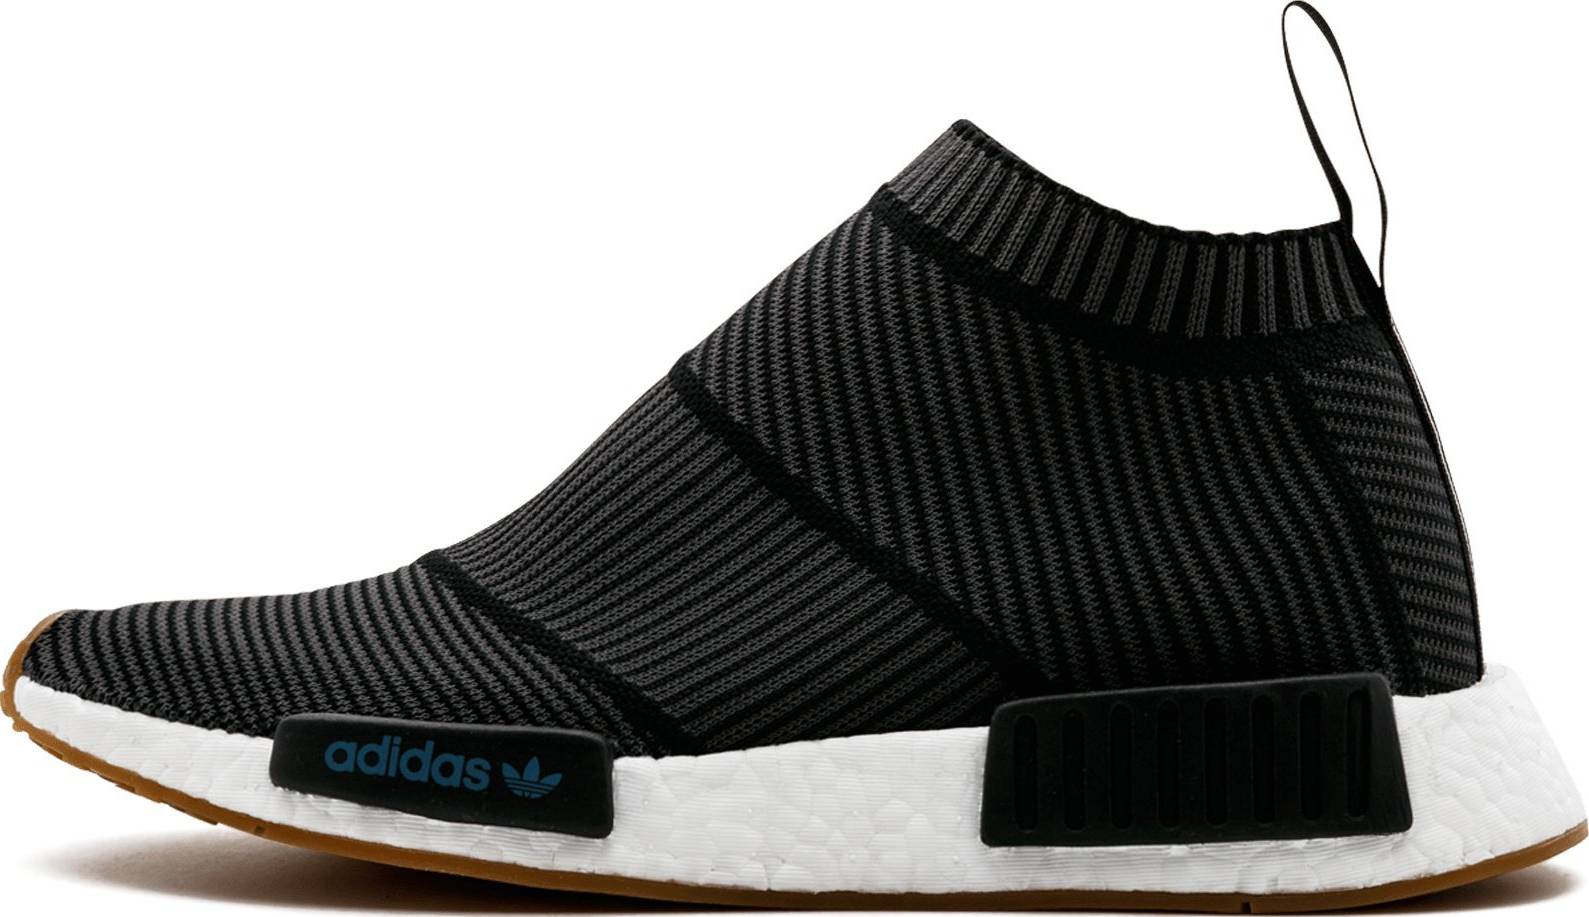 Adidas NMD_CS1 Primeknit sneakers in black | pasek z nadrukiem busenitz adidas dodaje | Infrastructure-intelligenceShops